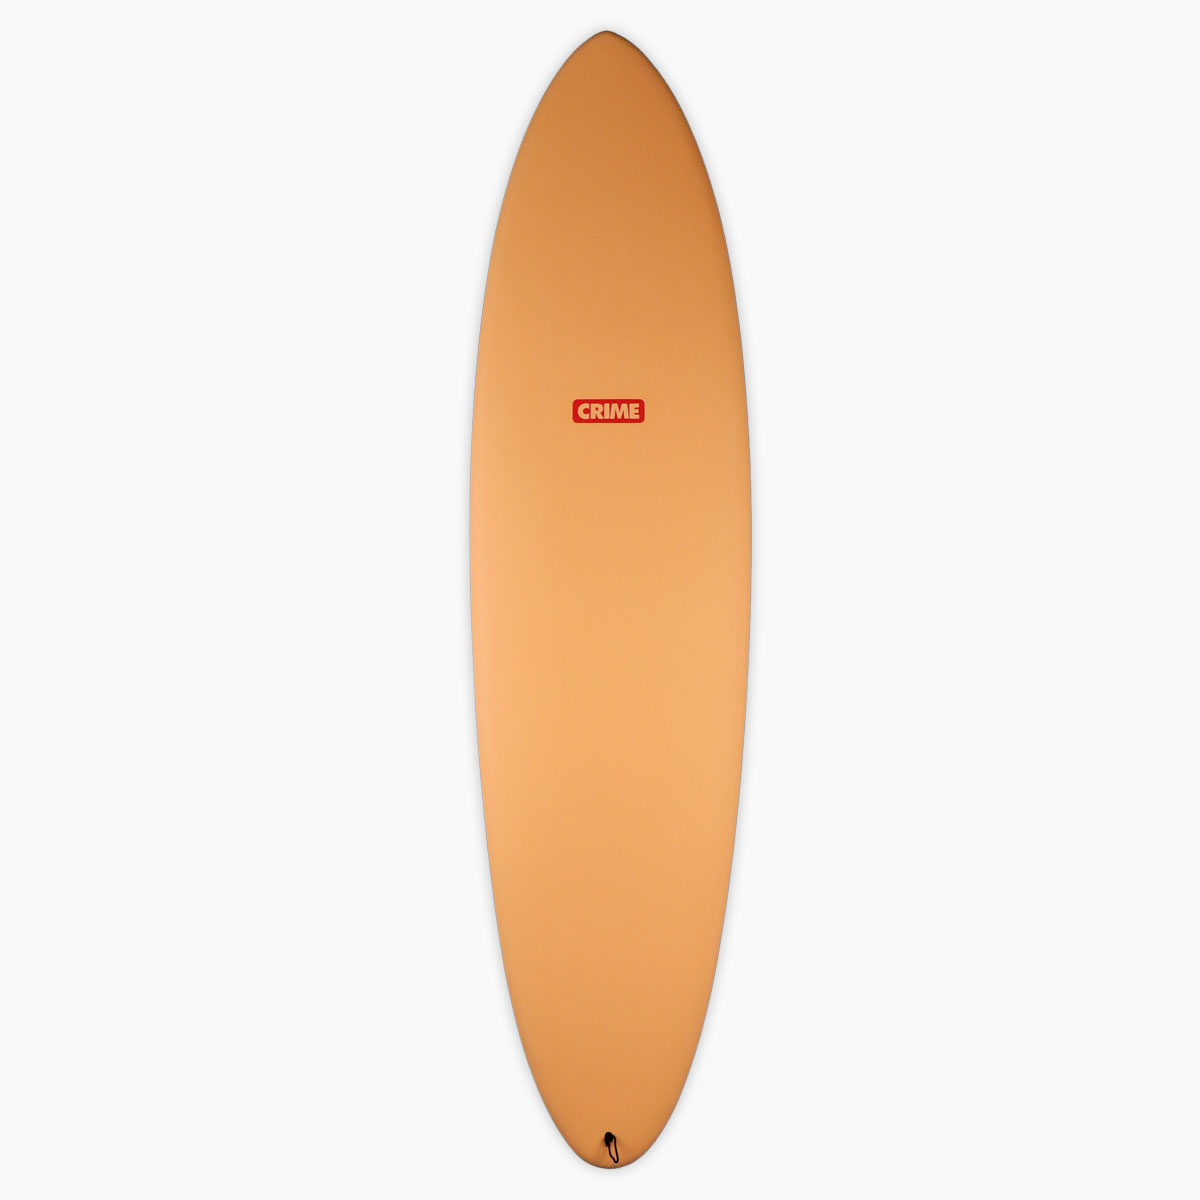 SurfBoardNet / サーフボード ブランド:CRIME SURFBOARDS